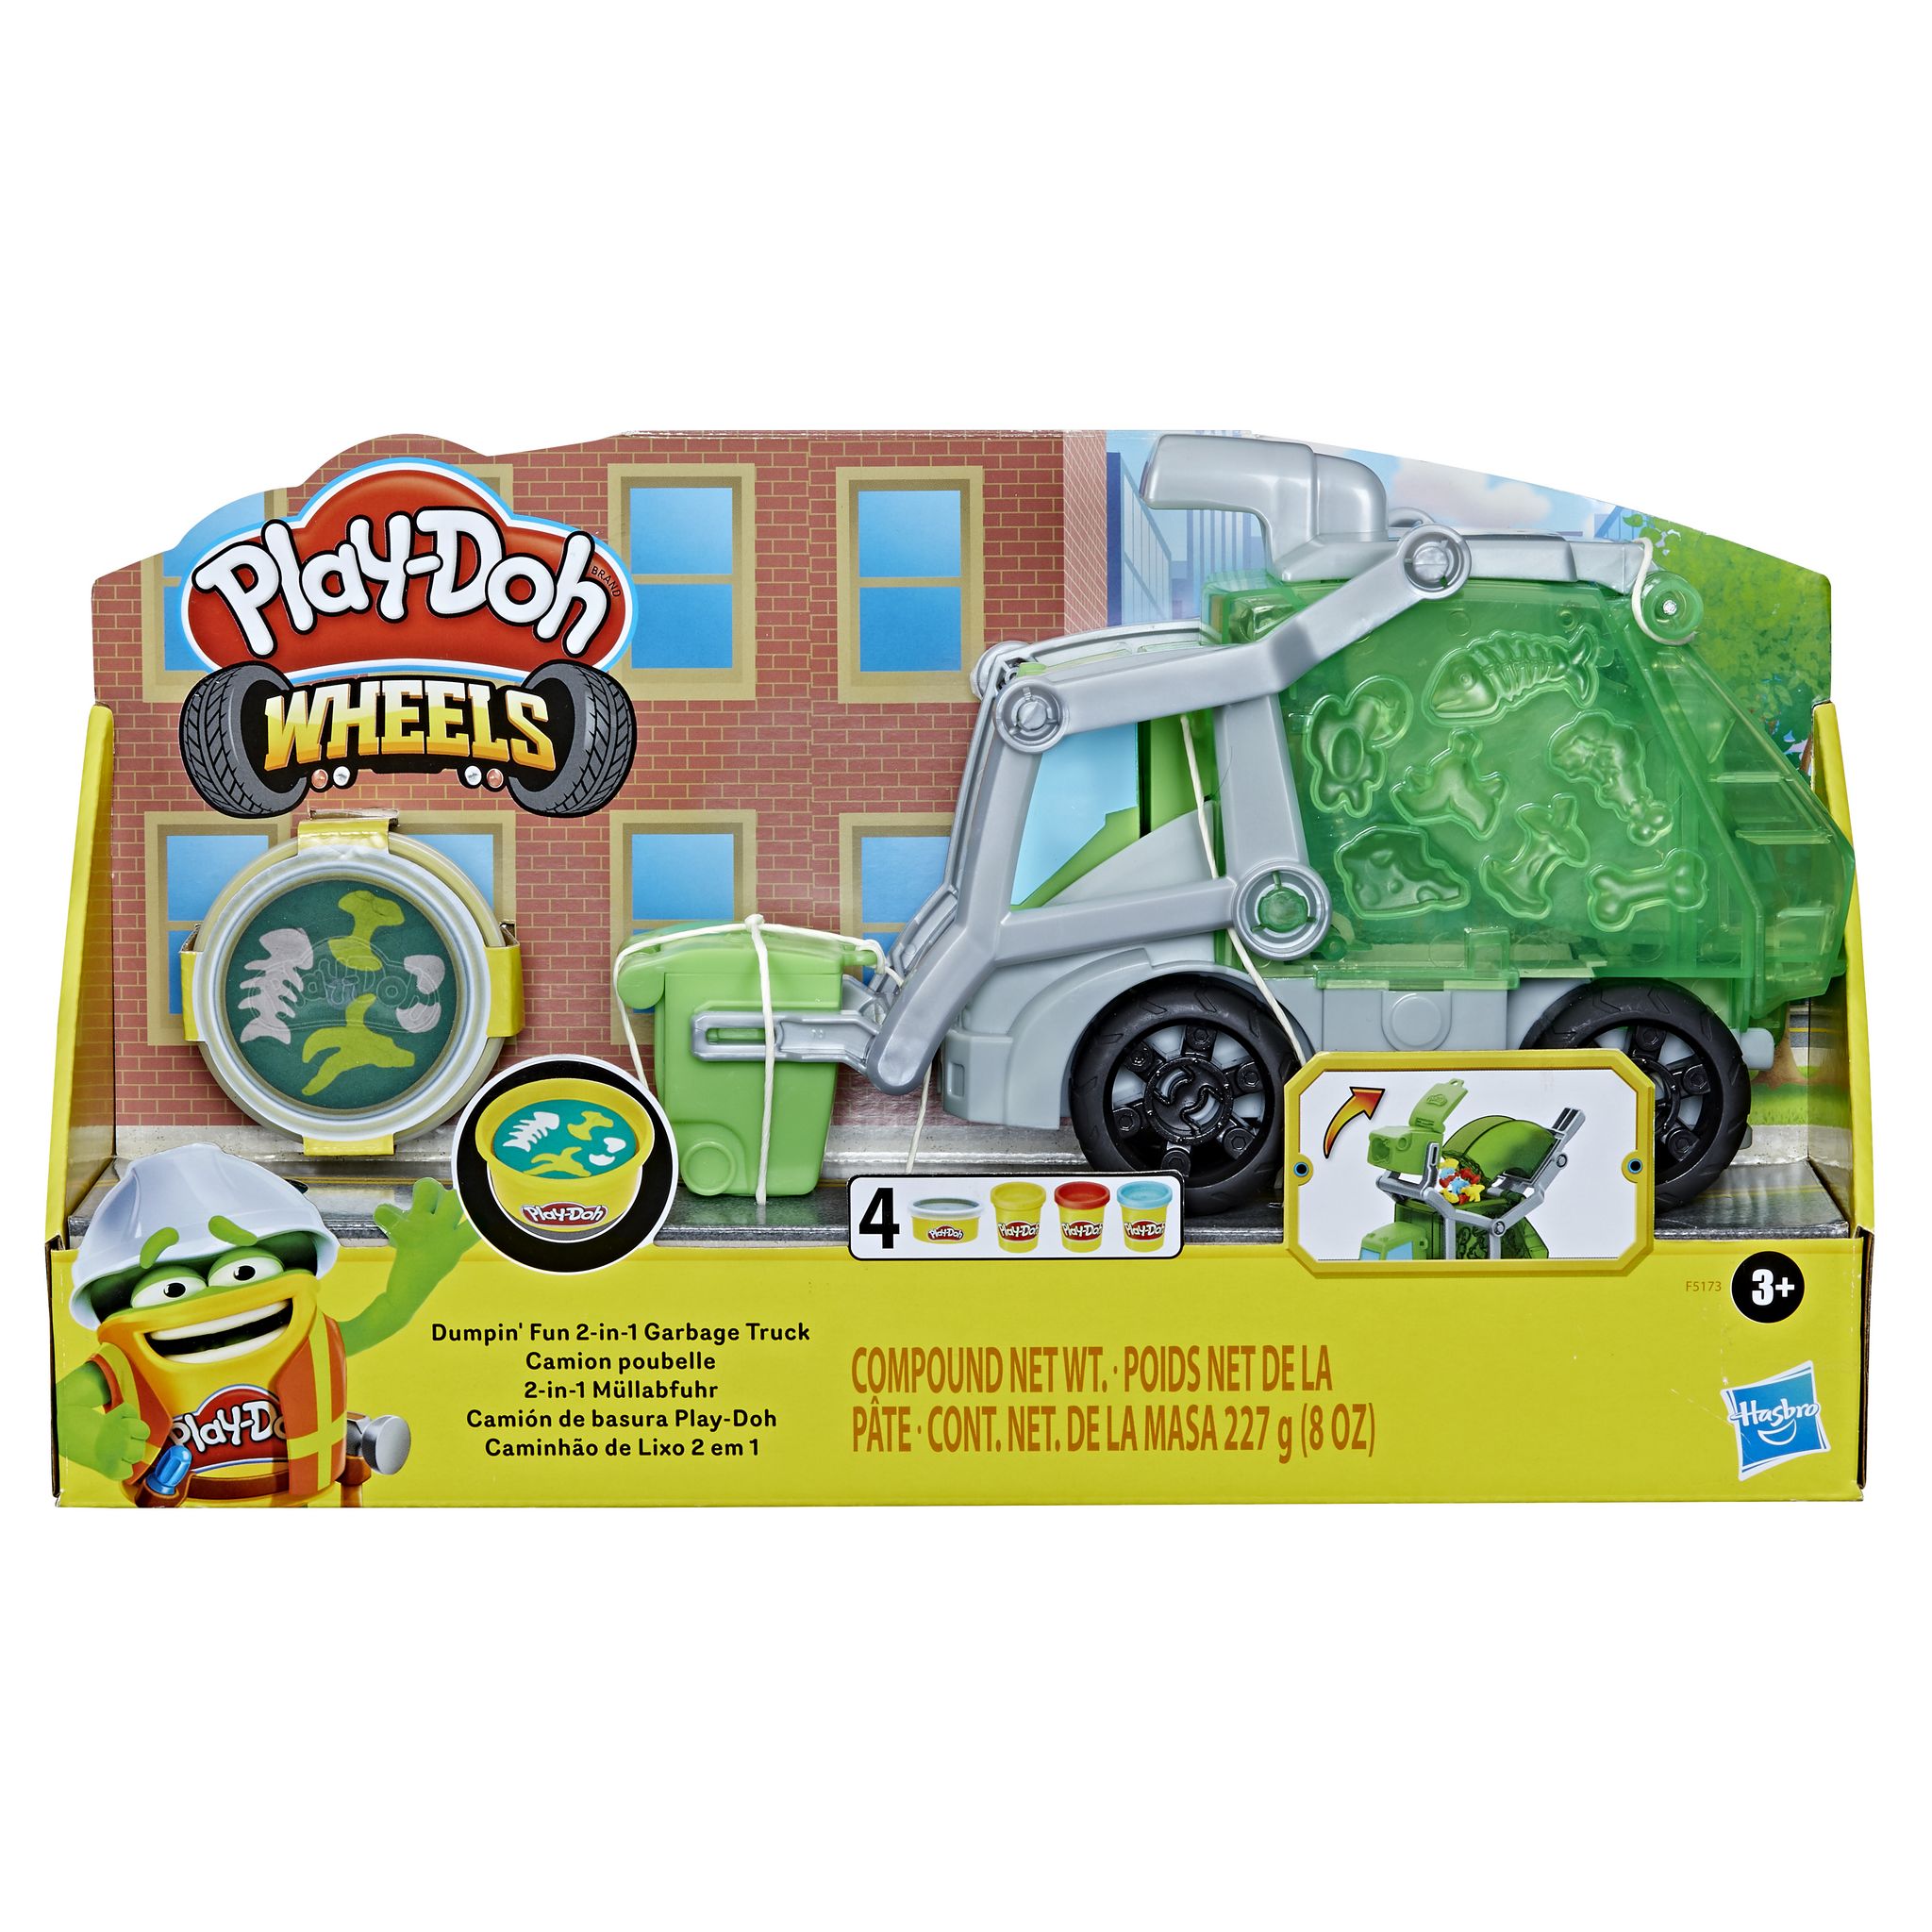 HASBRO Play-Doh Wheels camion poubelle pas cher 